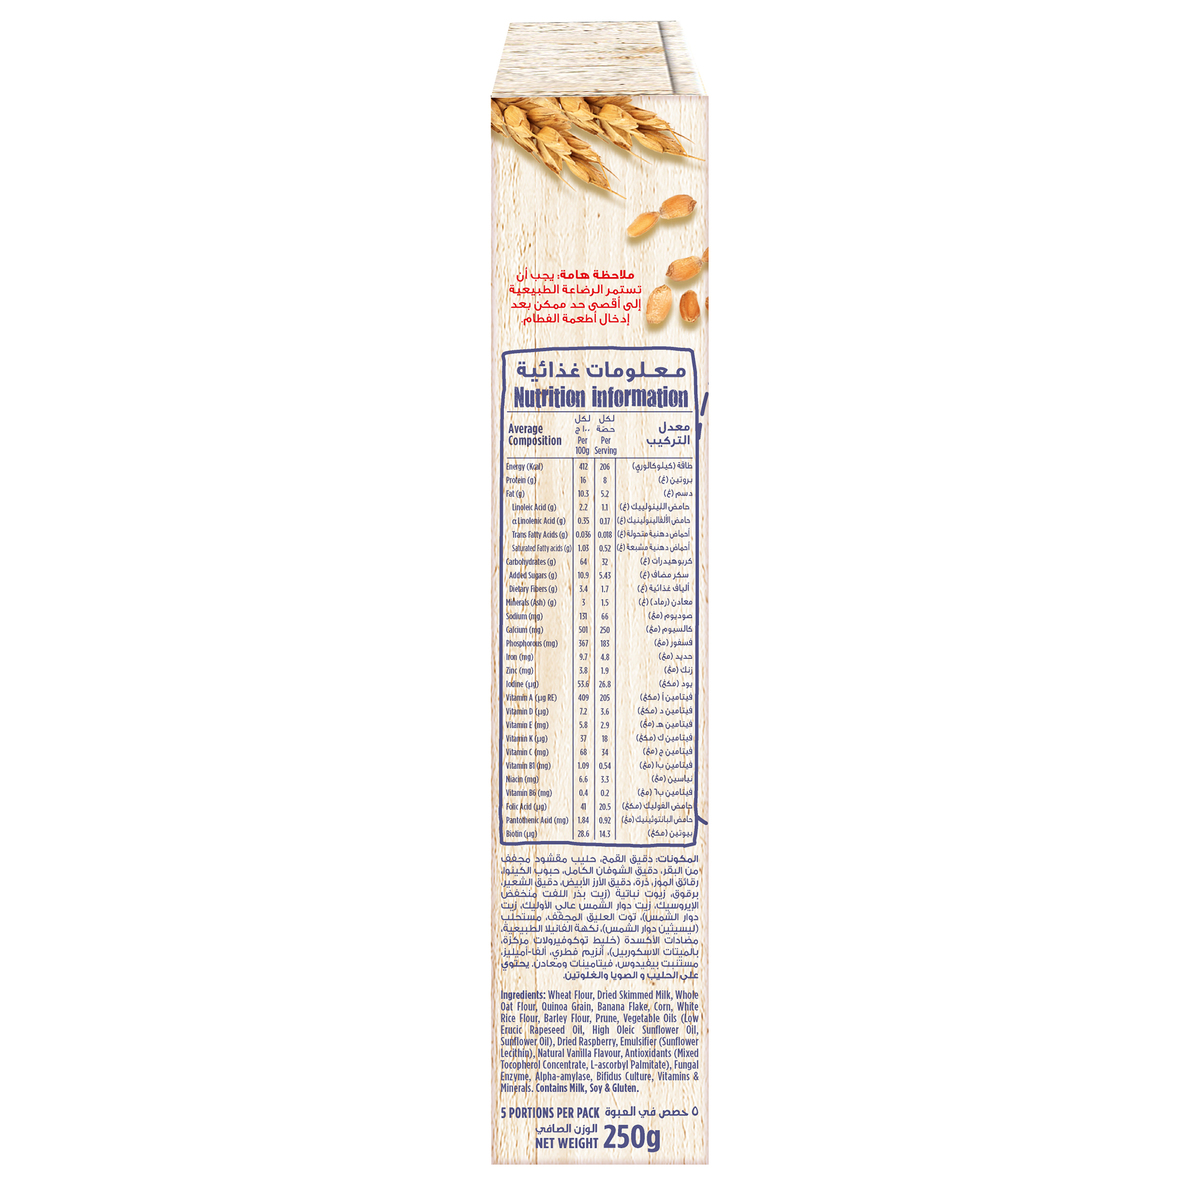 Nestle Cerelac Farmer's Selection Bib 5 Cereals Quinoa Banana Raspberry & Prune From 6 Months 250g